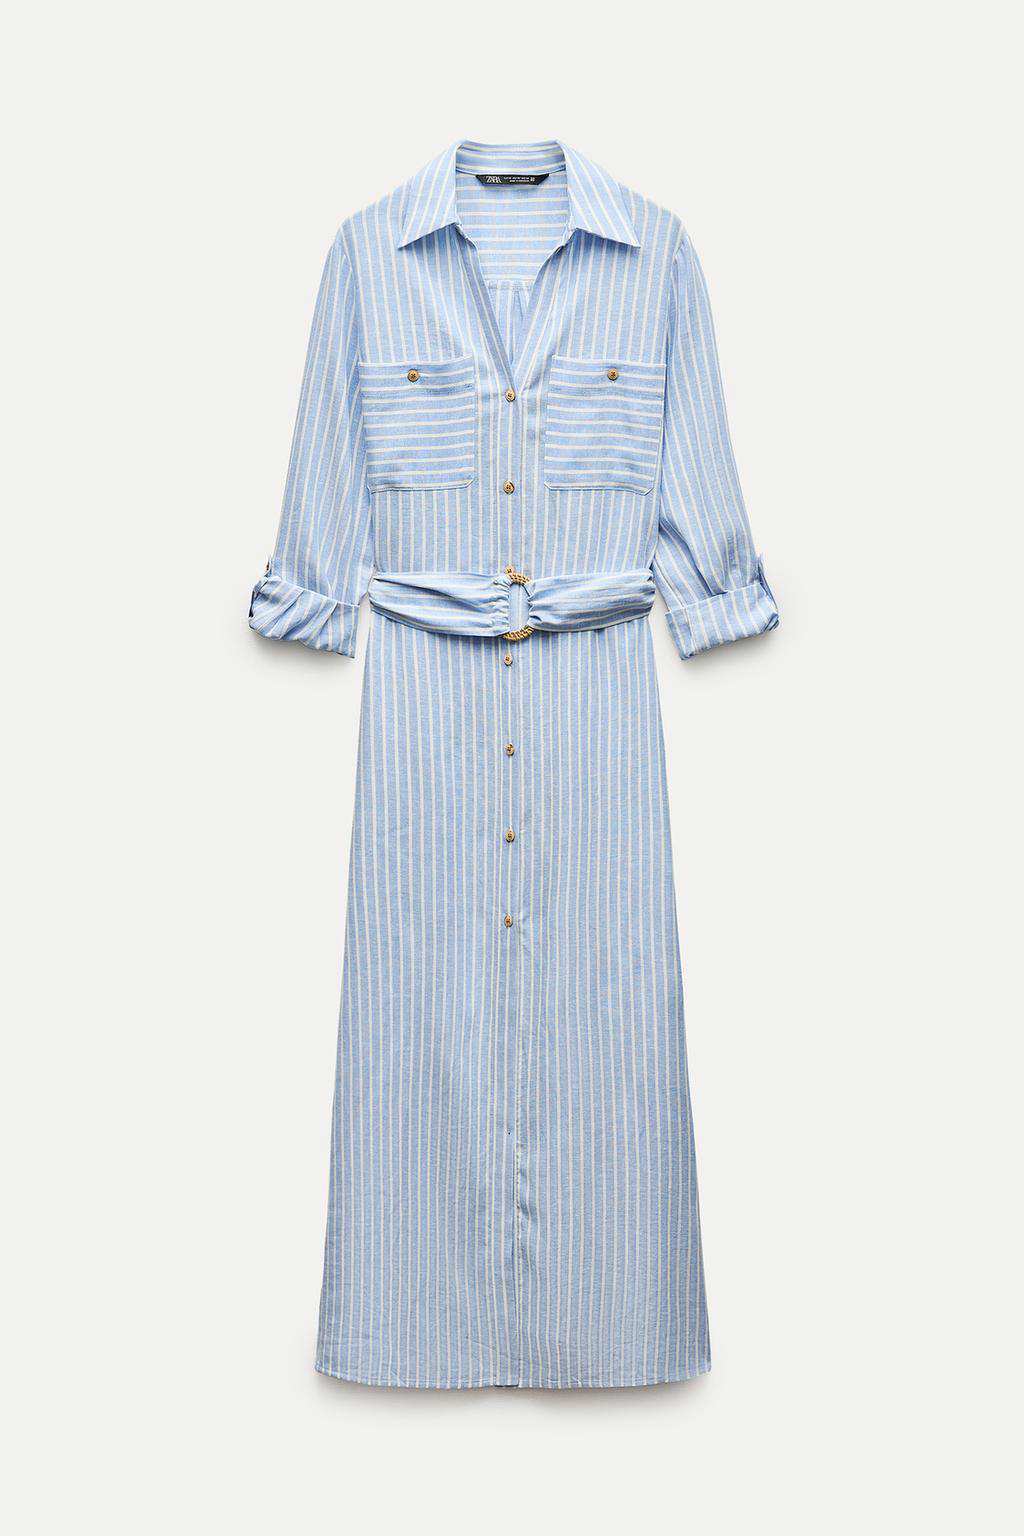 Vestido camisero midi con lino de Zara 29,99 euros